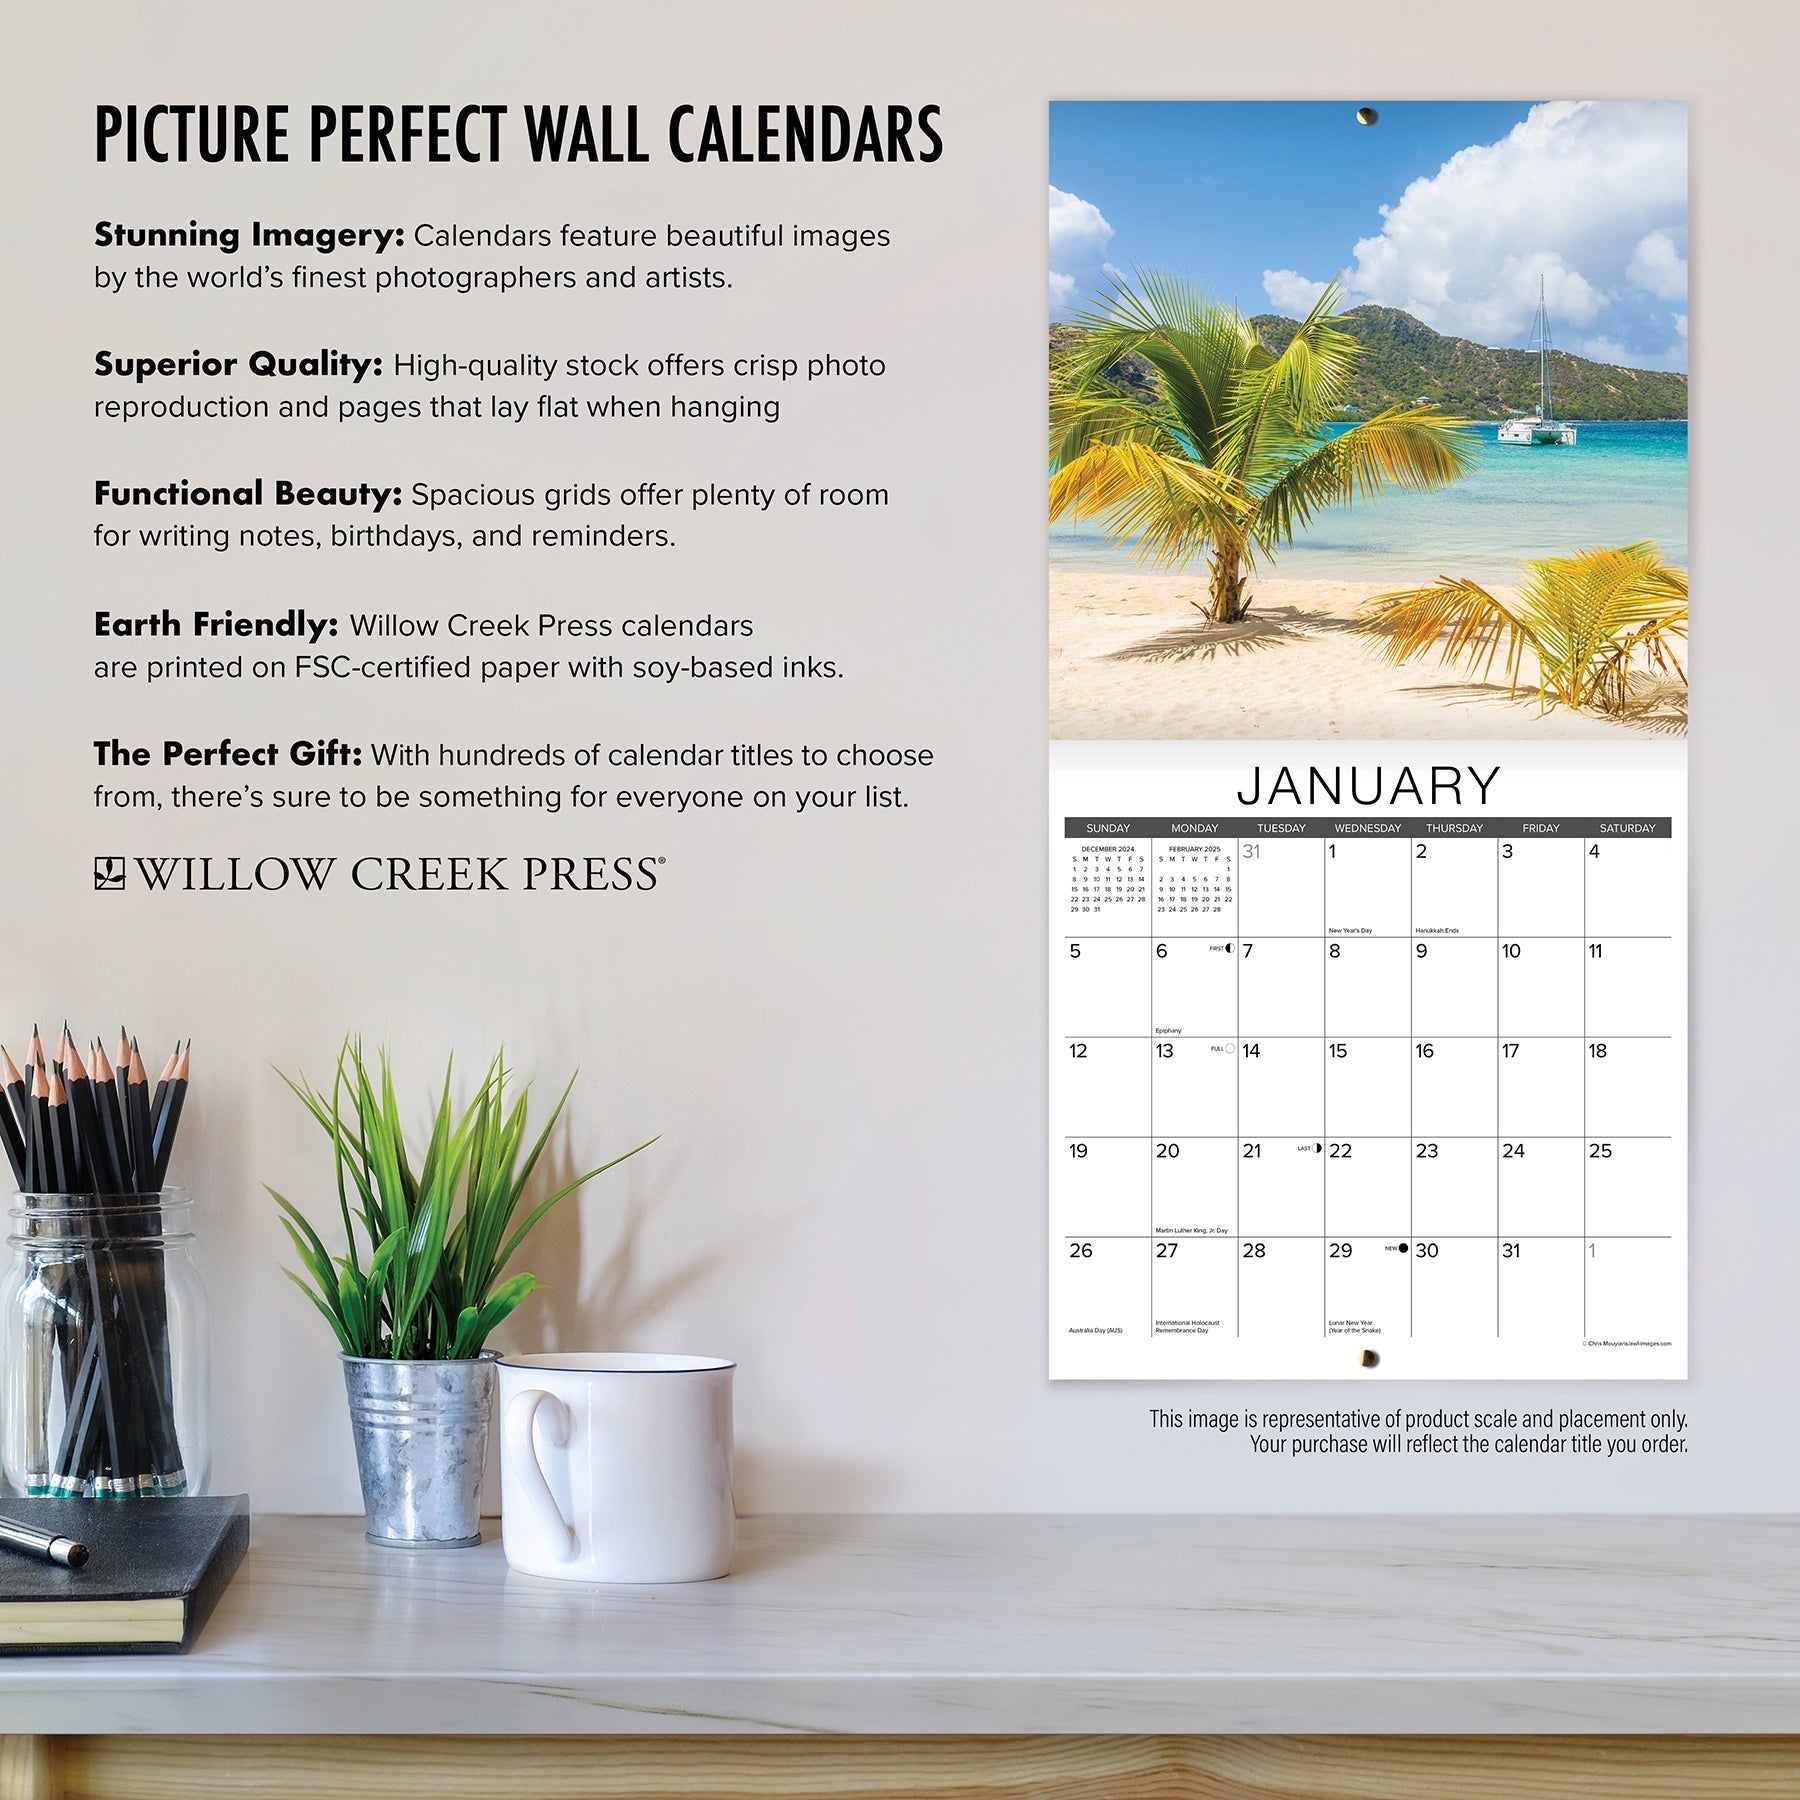 2025 T-Rex Yoga - Square Wall Calendar